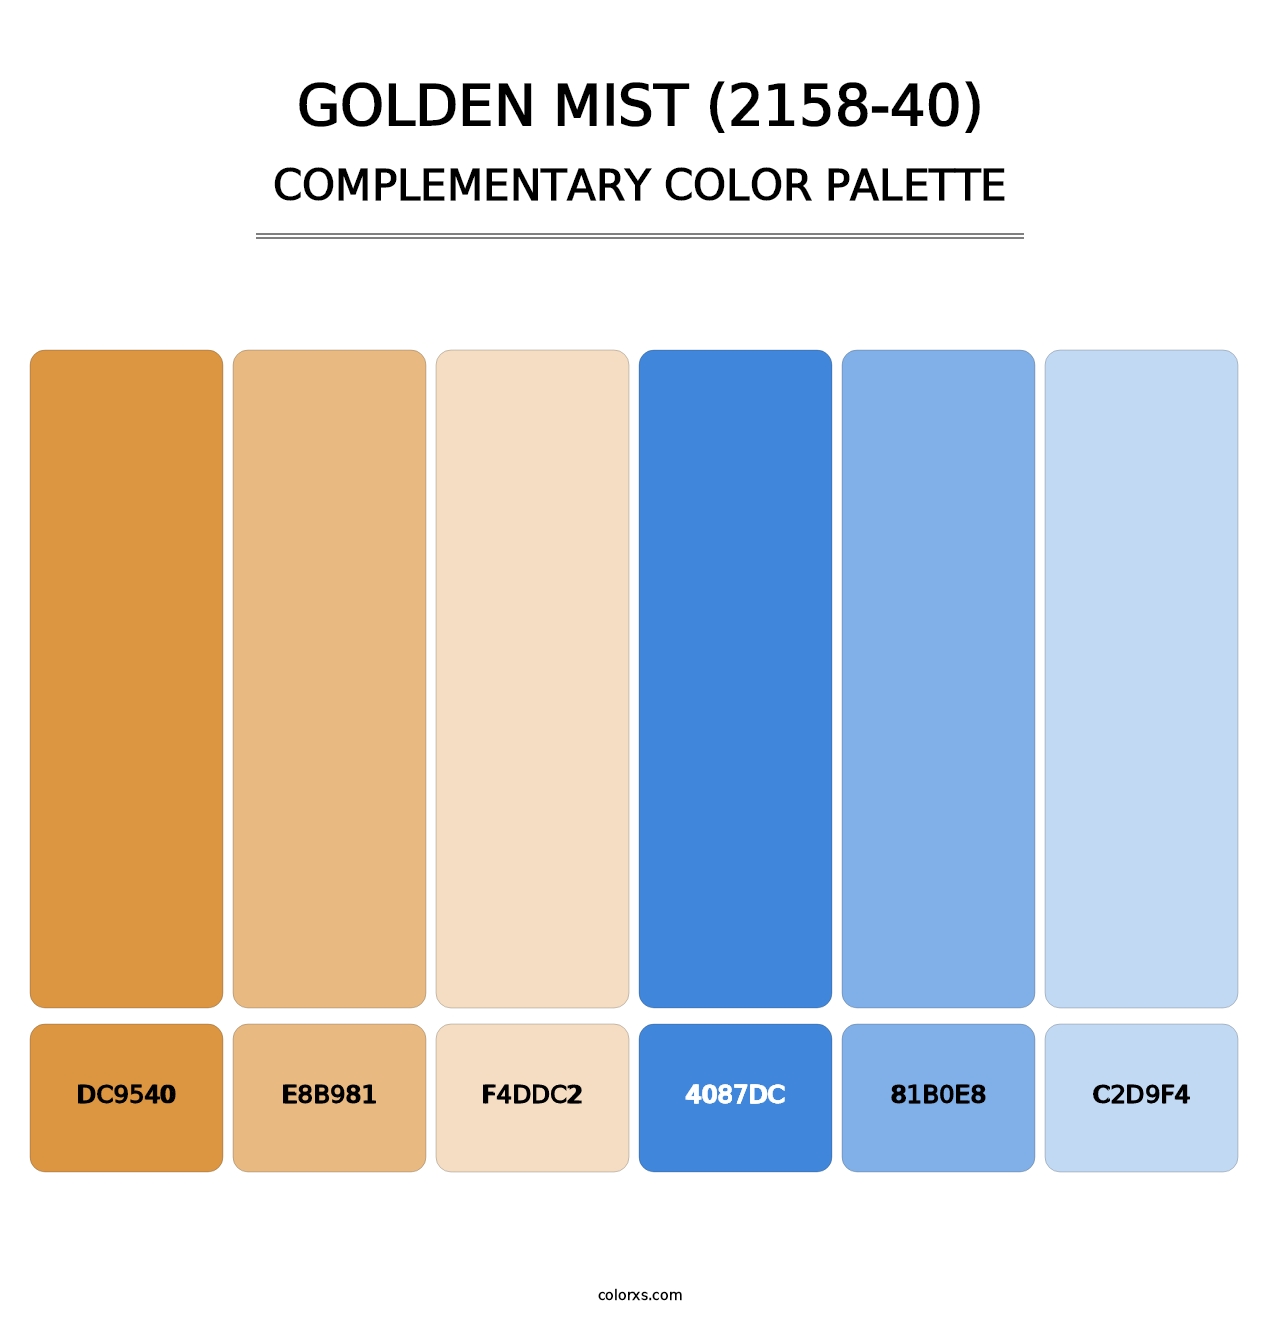 Golden Mist (2158-40) - Complementary Color Palette